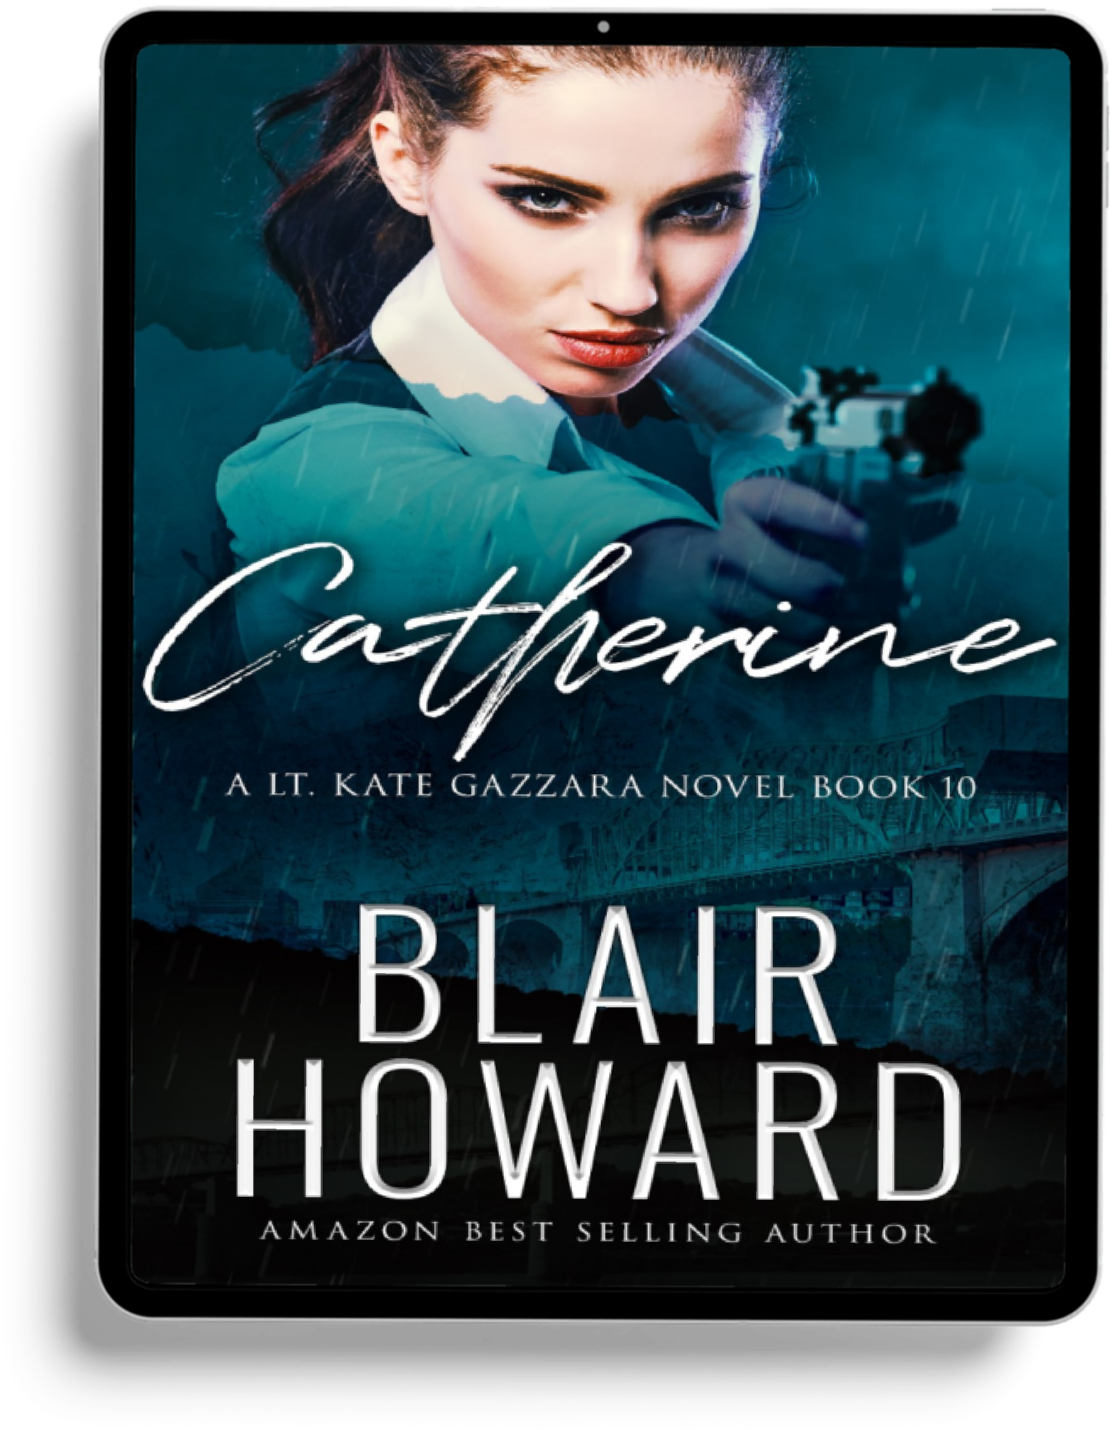 Catherine: Case Ten: A Lt. Kate Gazzara Novel